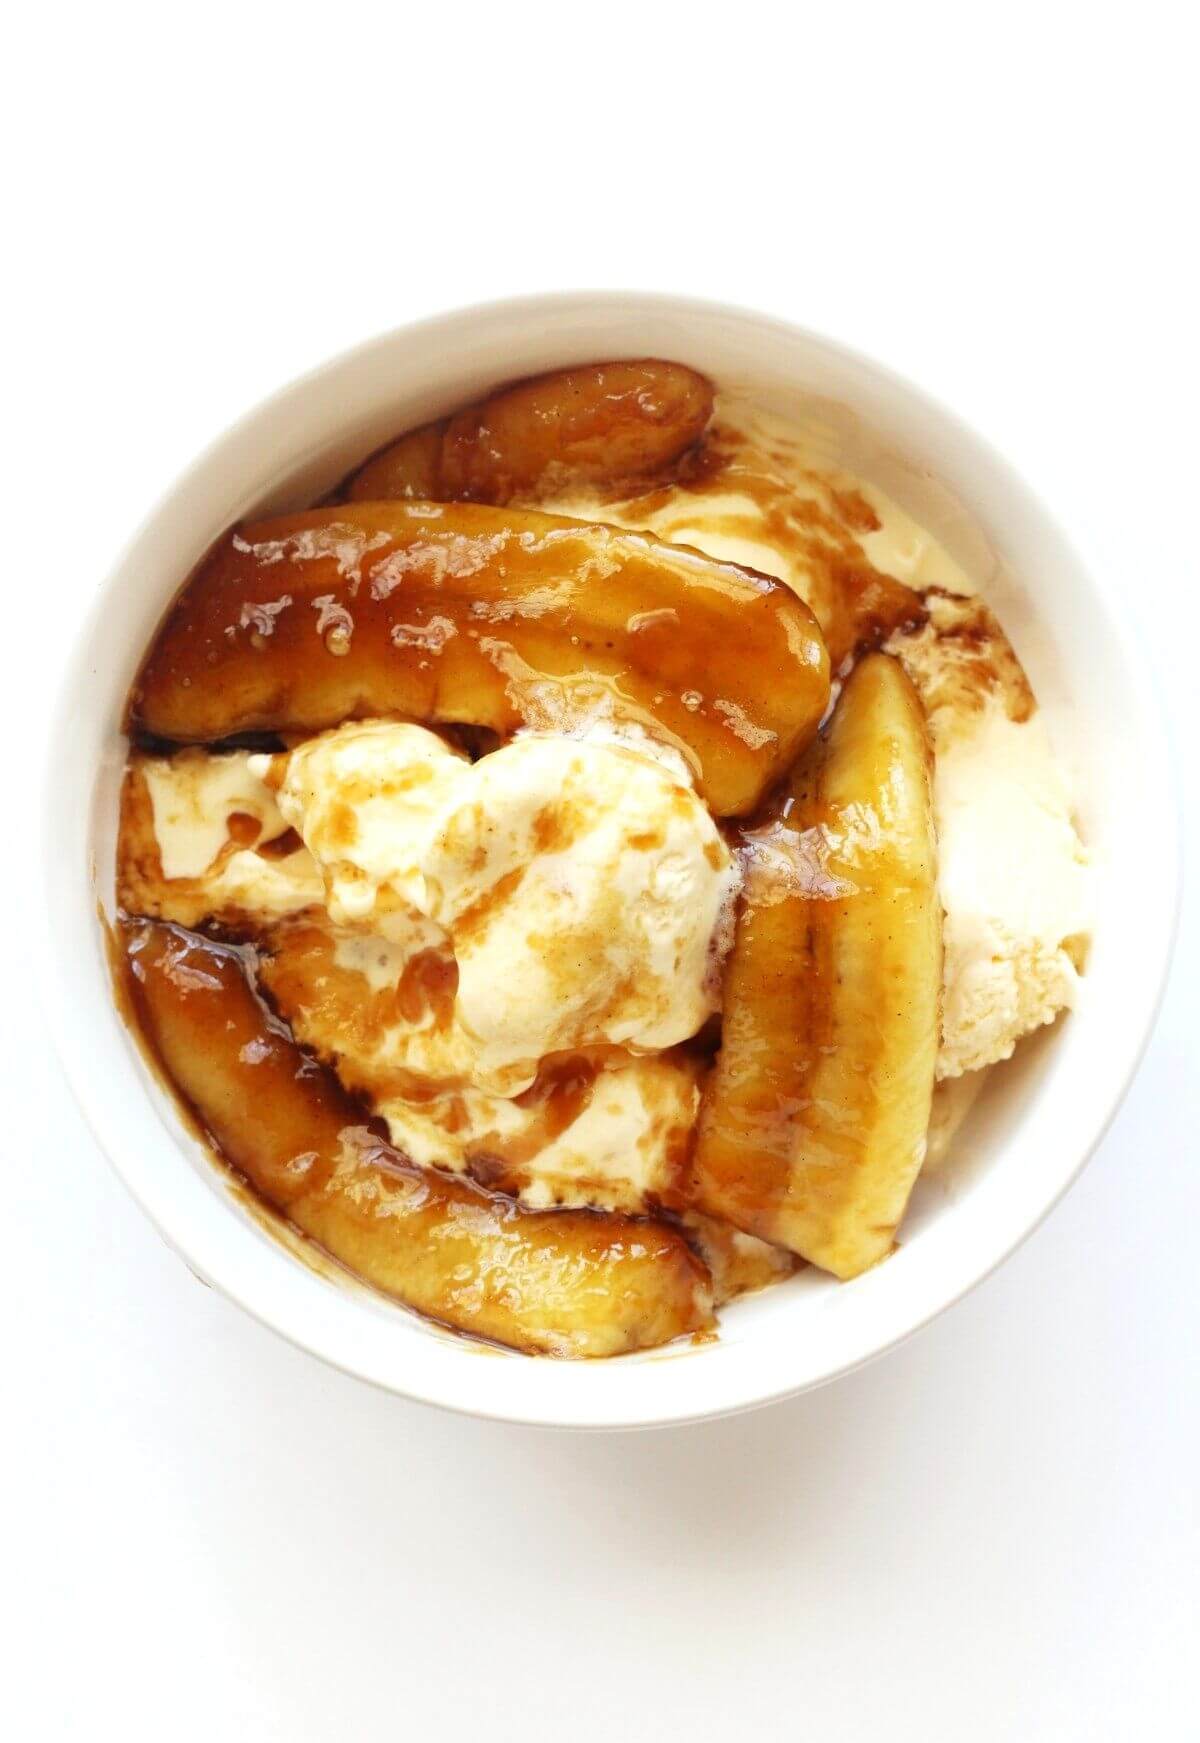 bananas foster with vegan ice cream in white bowl